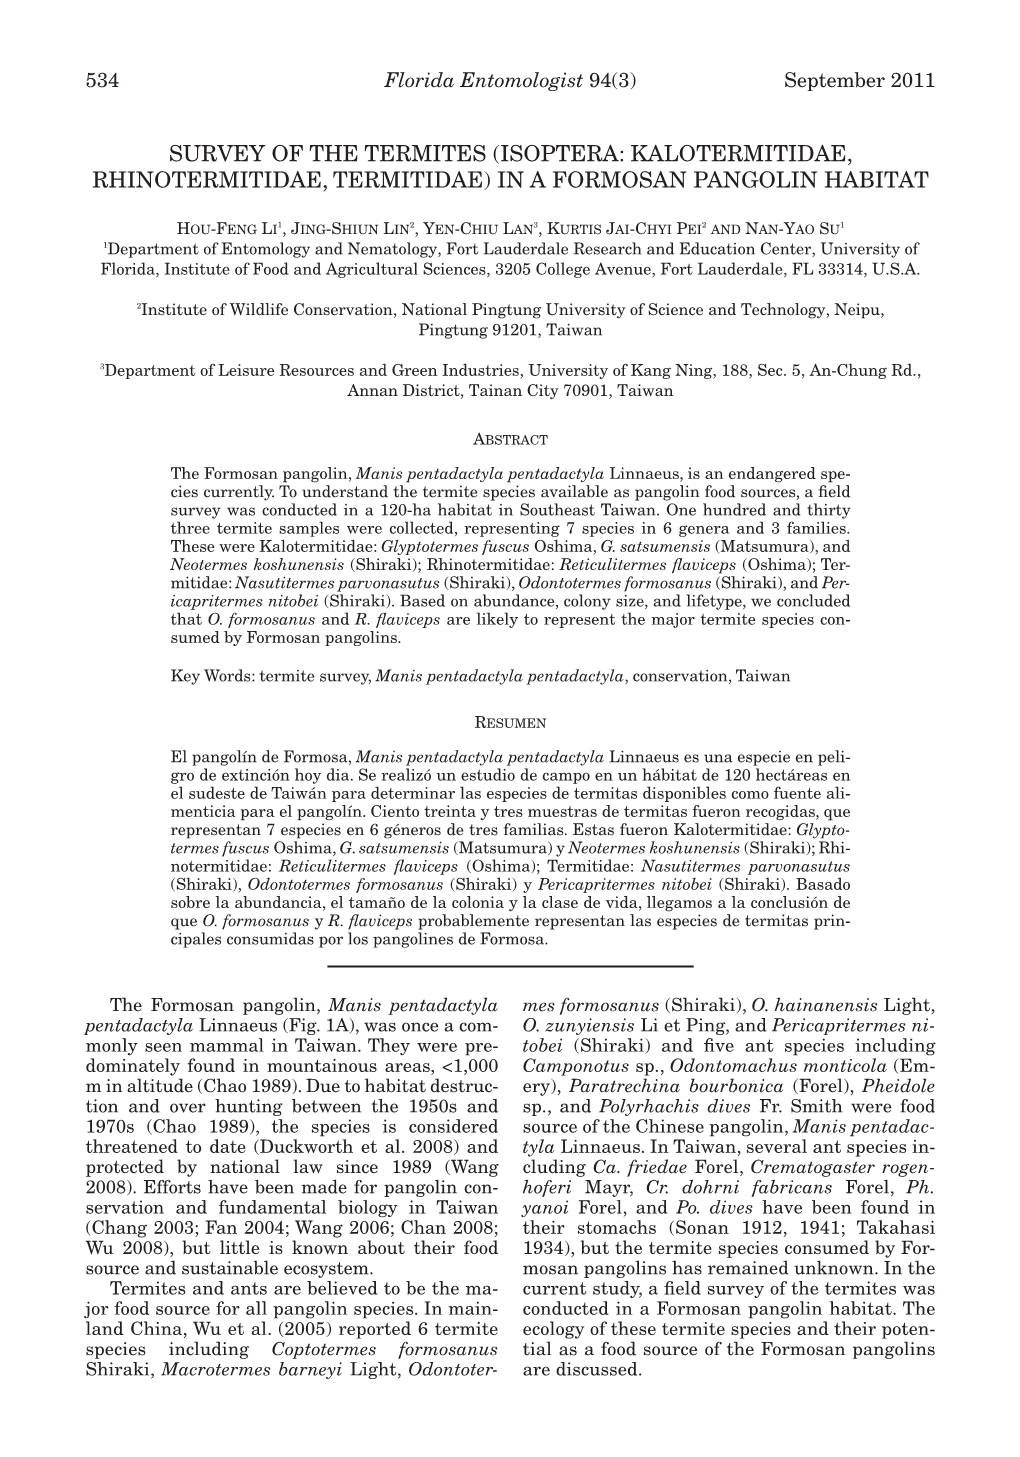 Survey of the Termites (Isoptera: Kalotermitidae, Rhinotermitidae, Termitidae) in a Formosan Pangolin Habitat